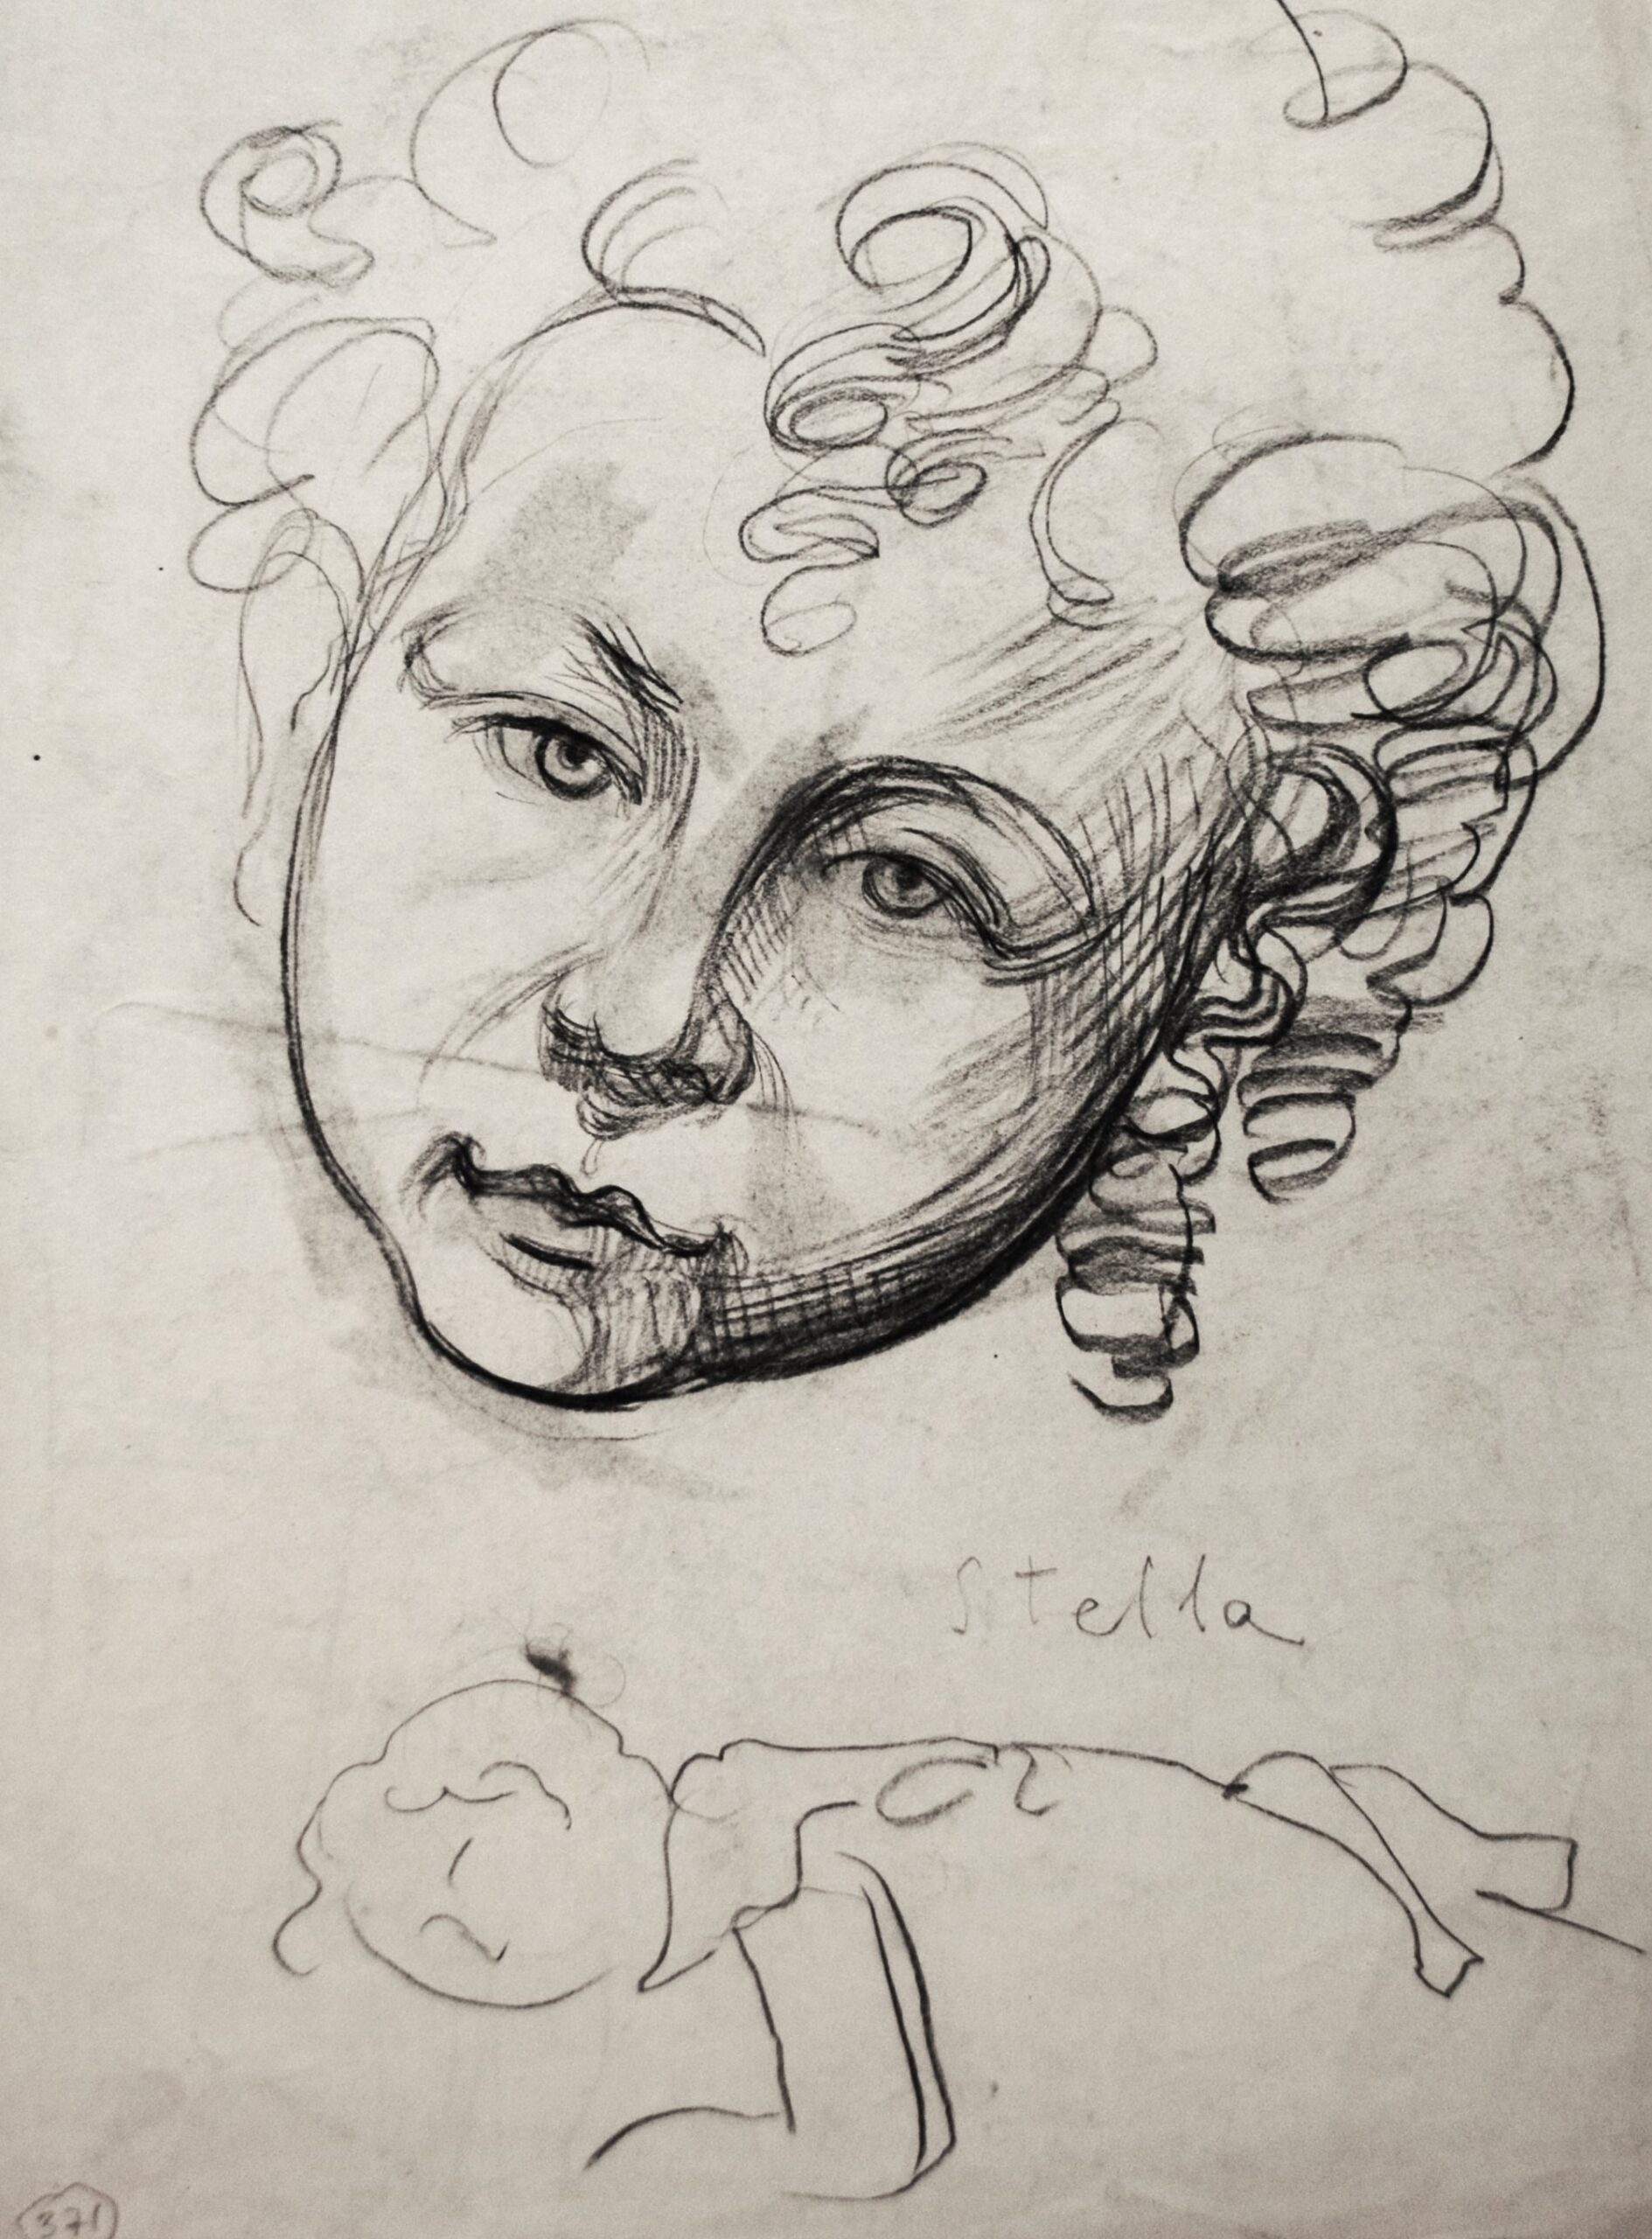 Dibujo de José Manaut titulado Stella, 1946. Carboncillo sobre papel.